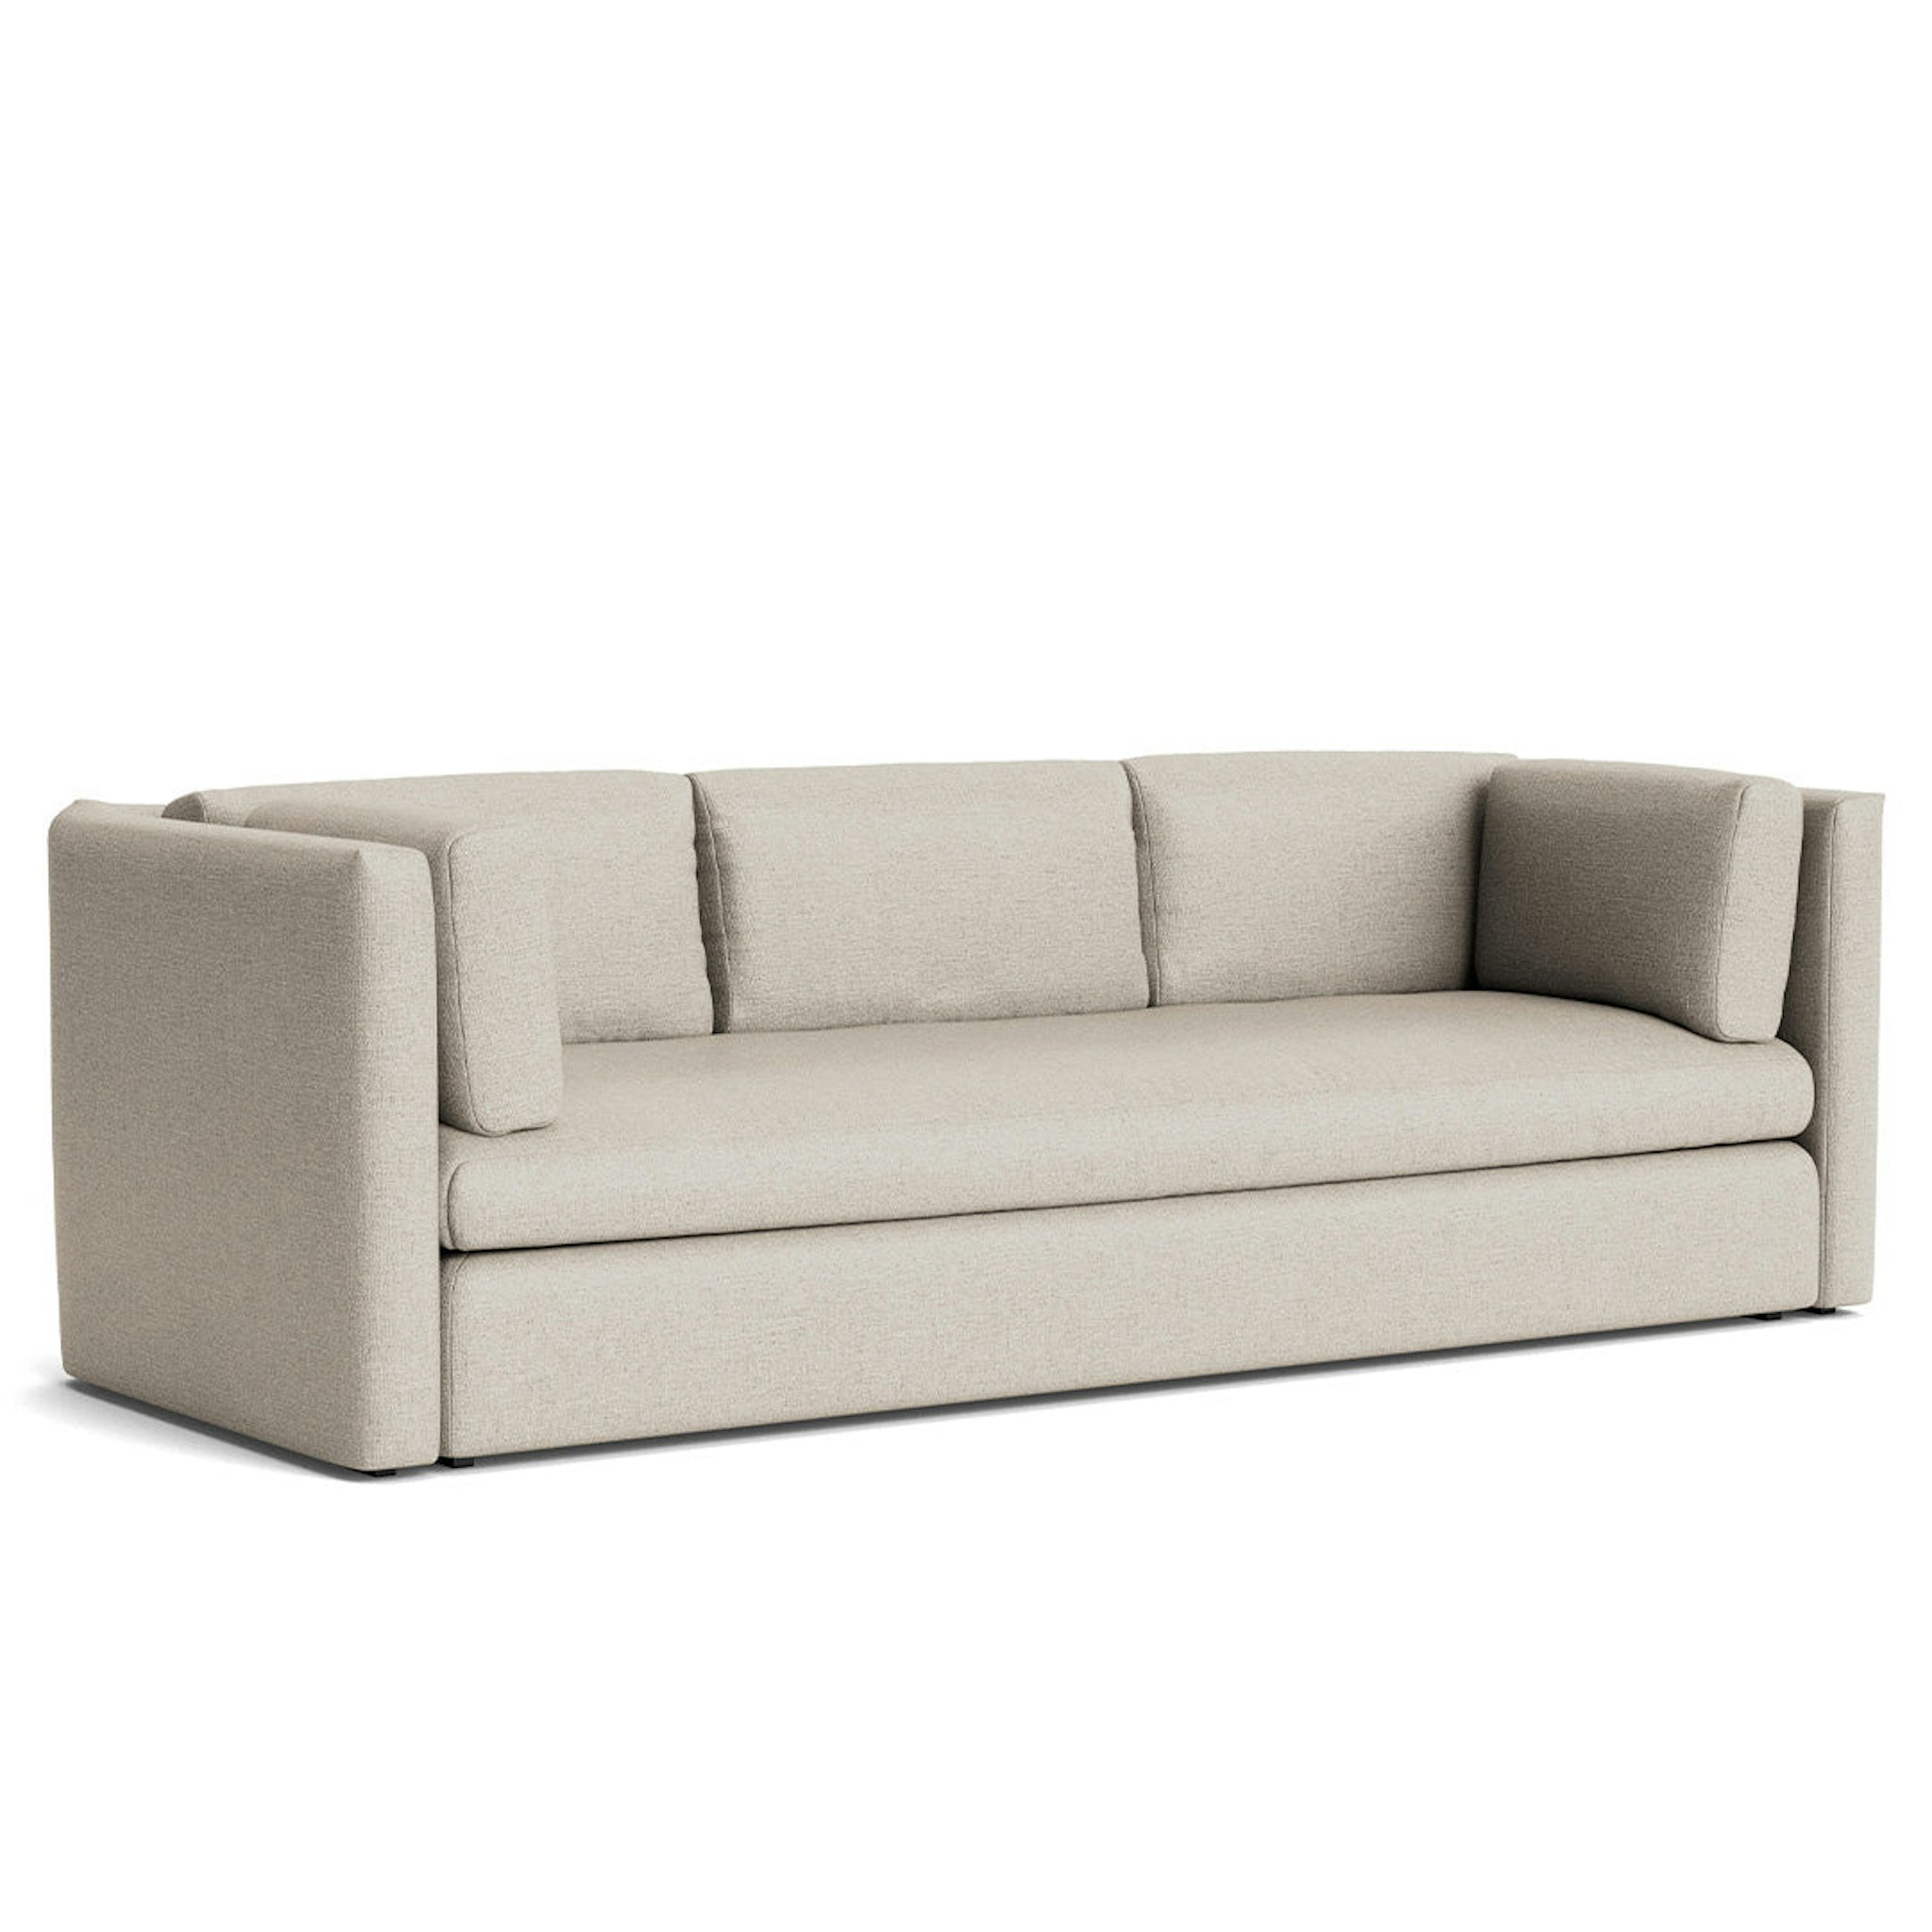 Hackney Sofa 3 Seater by Hay